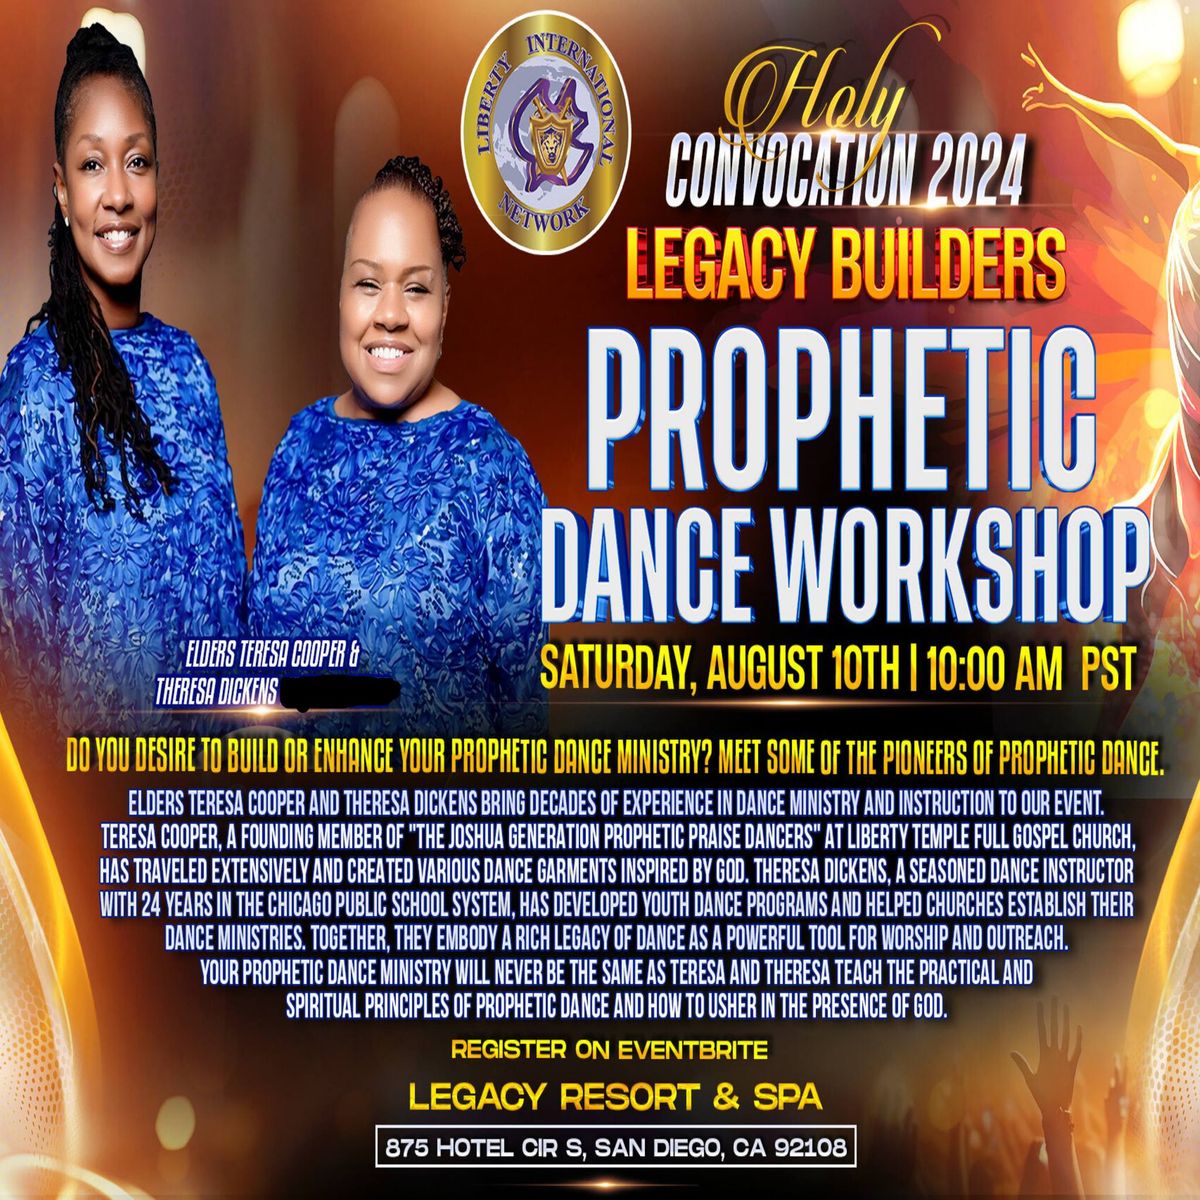 Prophetic Dance Workshop (Holy Convocaton 2024)